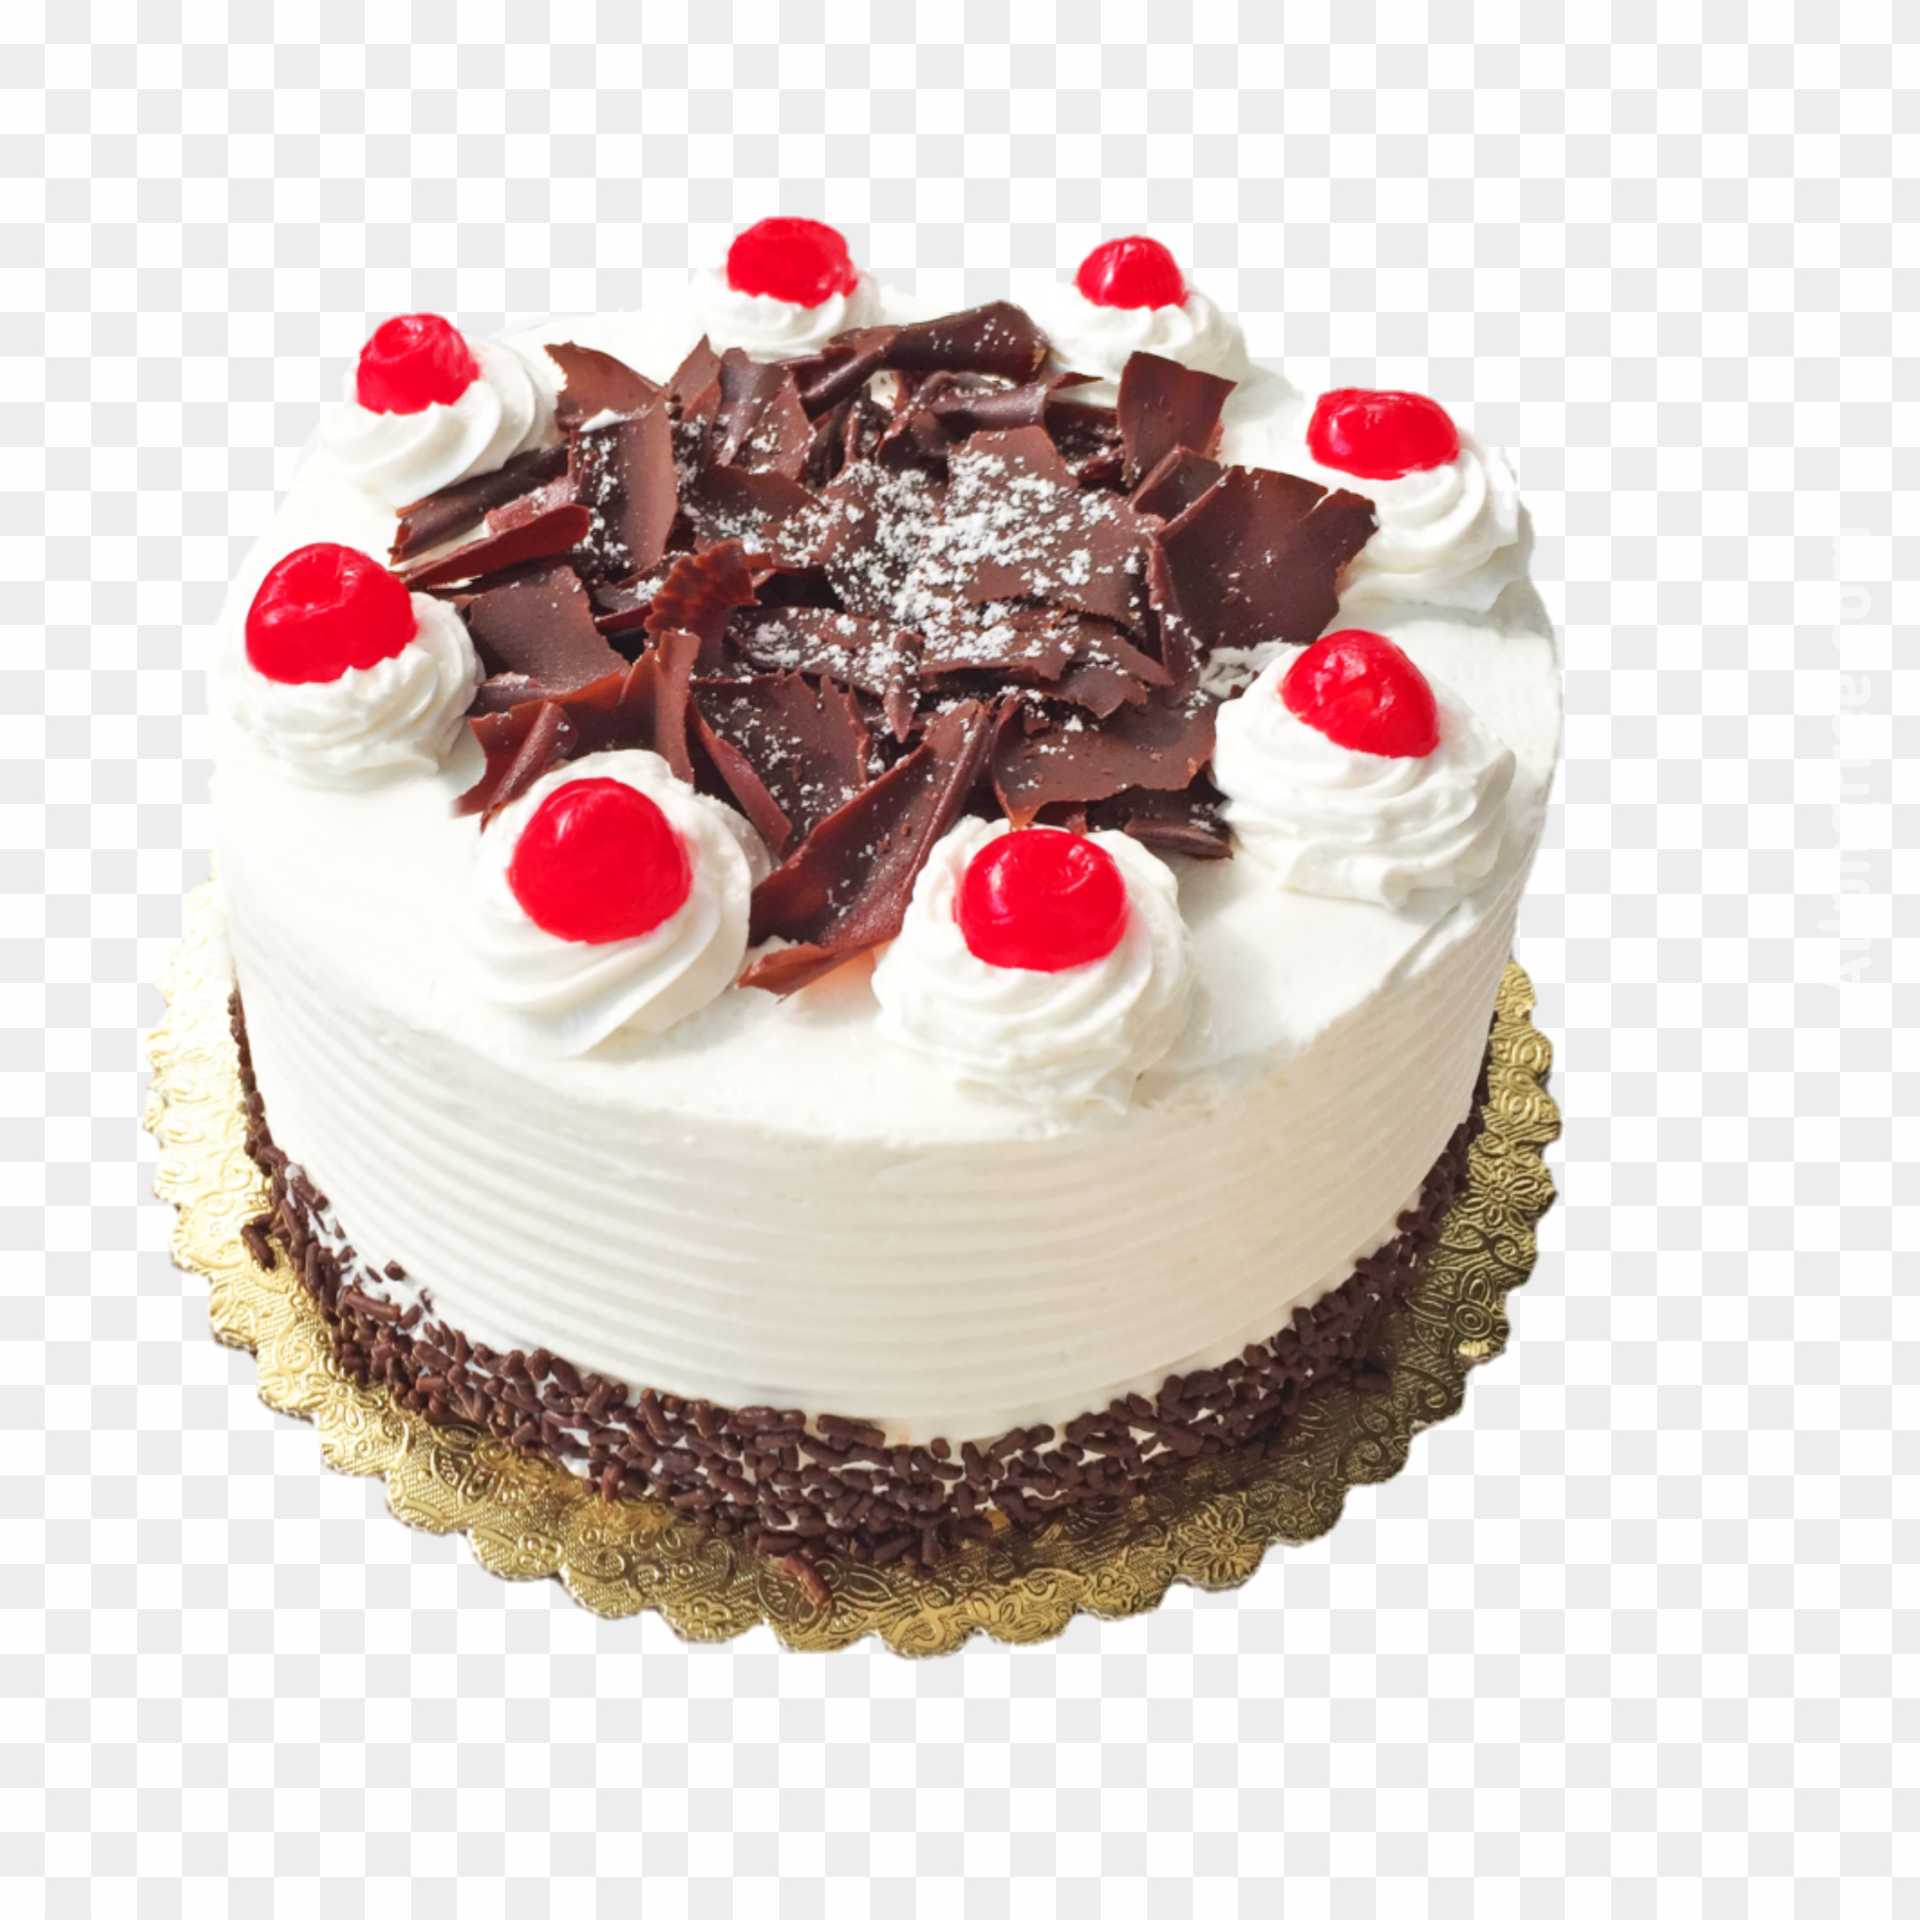 Birthday Cake PNG transparent image